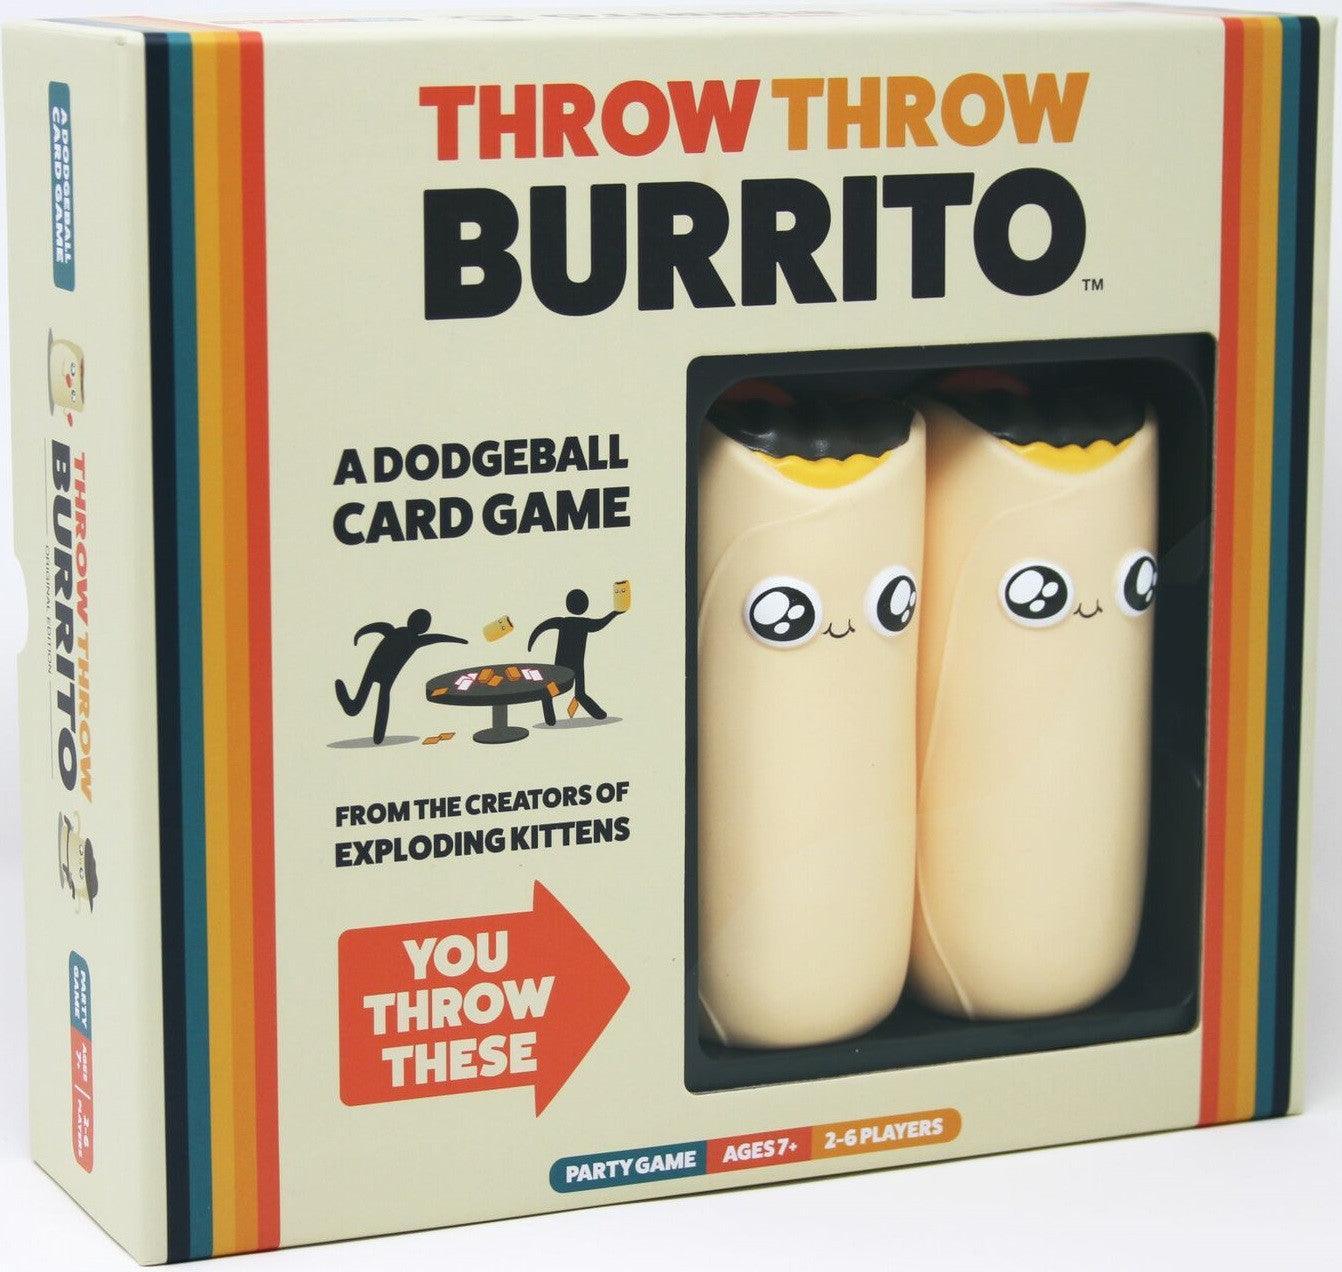 VR-69625 Throw Throw Burrito - Exploding Kittens - Titan Pop Culture